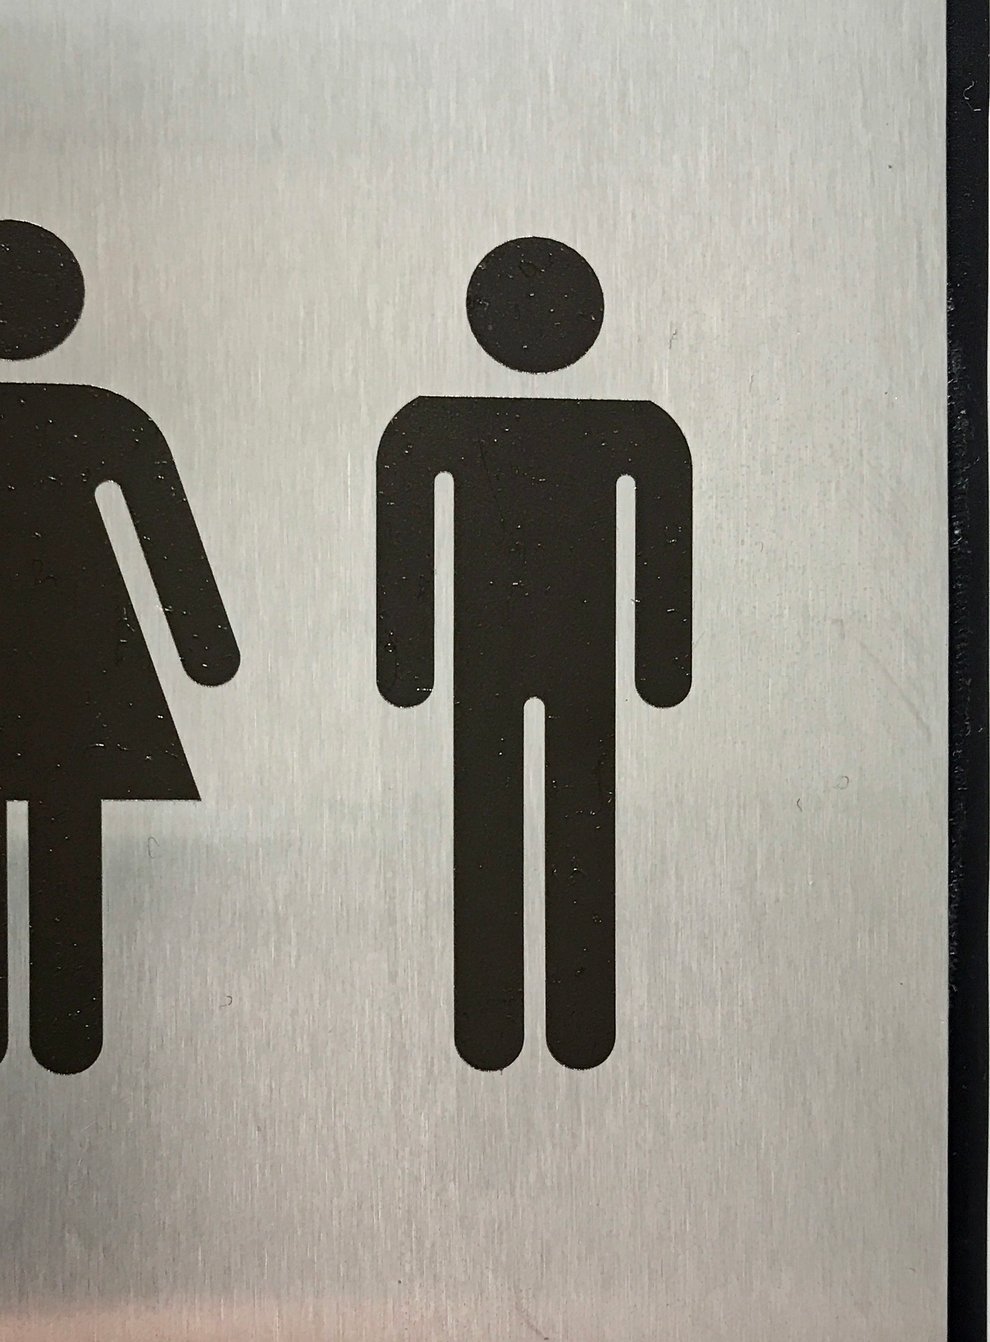 Gender signage on toilets (Martin Keene/PA)